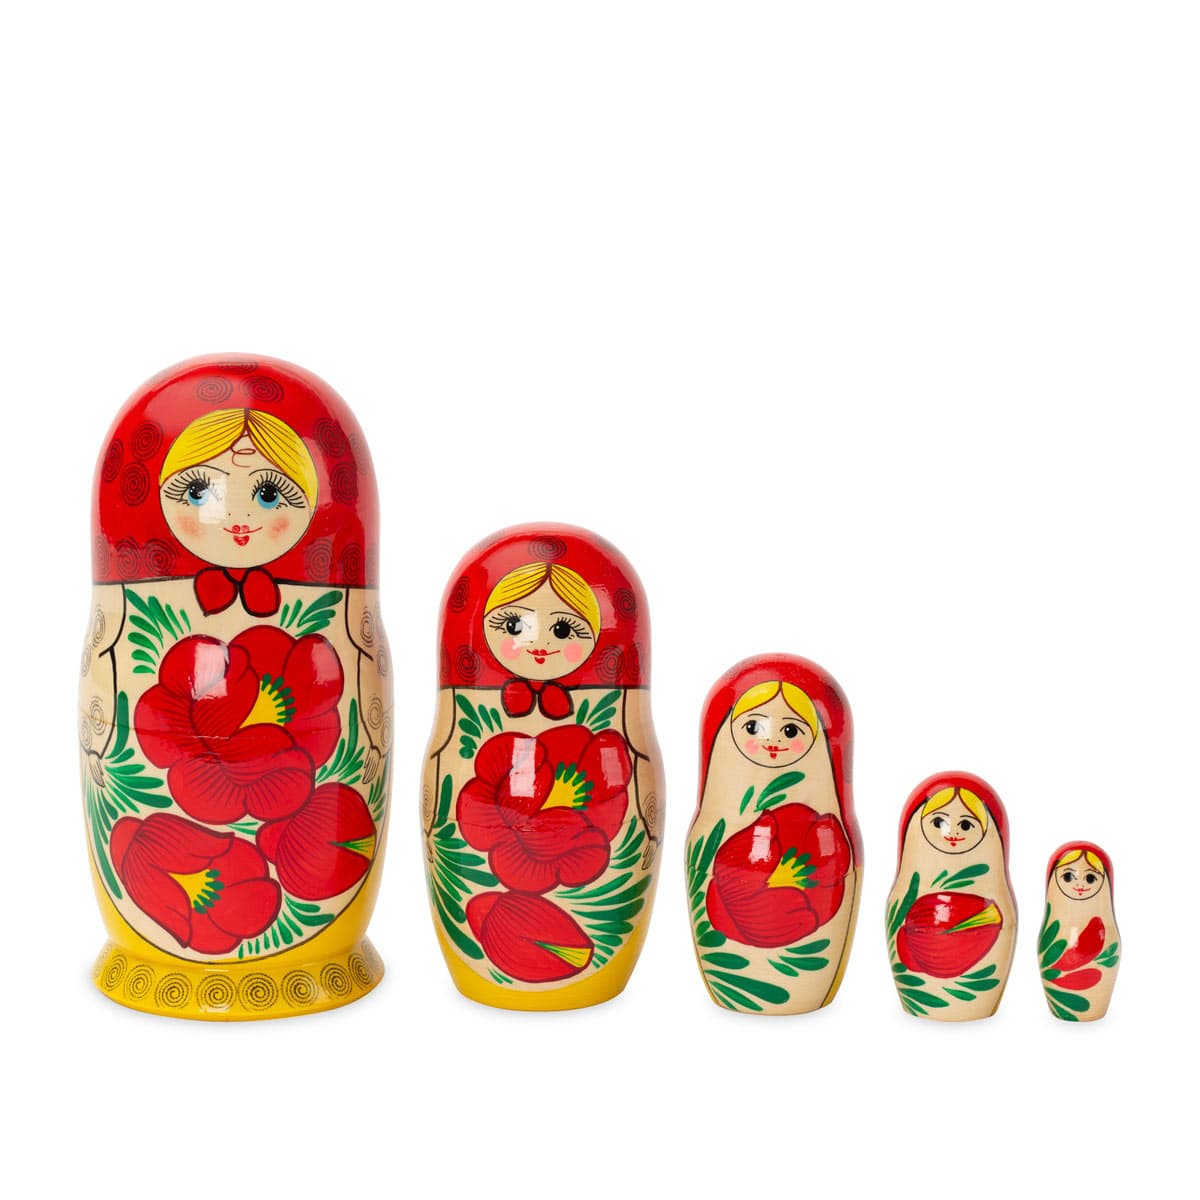 Azhna 5 piezas de animales familia anidación muñeca recuerdo Matryoshka colección decoración del hogar pintado a mano muñeca rusa 4 pulgadas muñeca apilable madera amarillo 